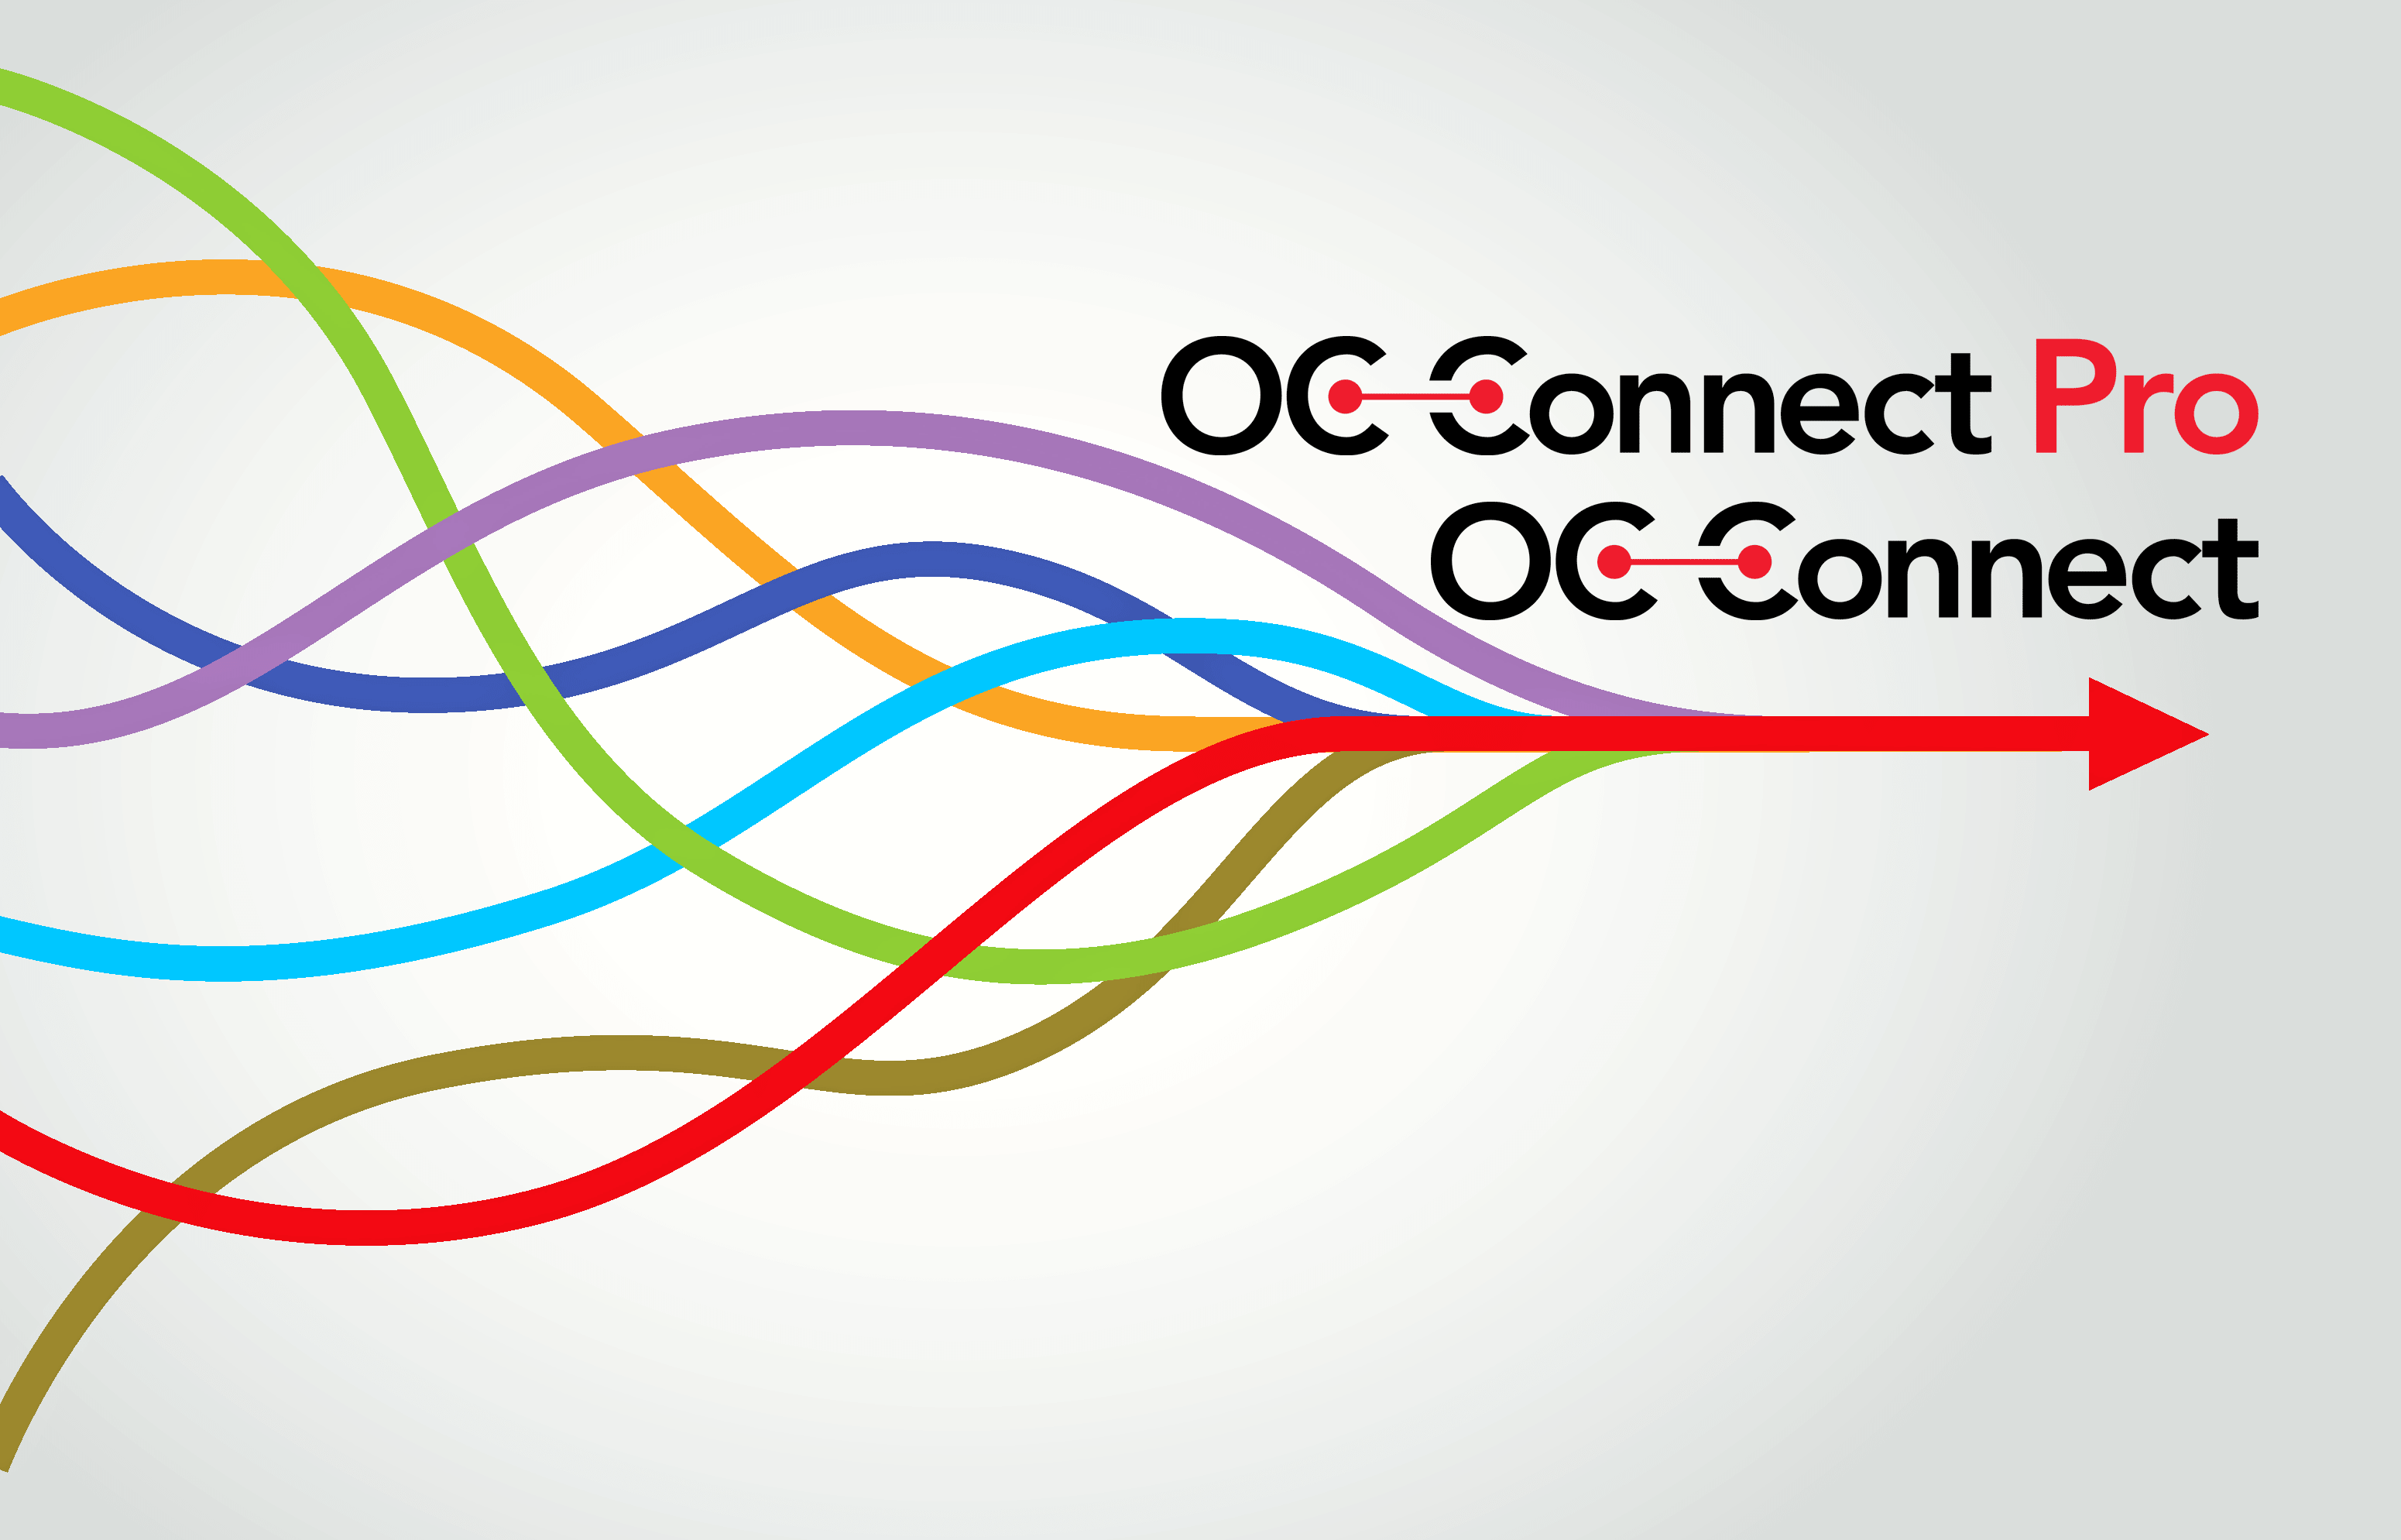 Pro connexions. Коннект. Connect лого. Pro connection. Коннектом изображения.